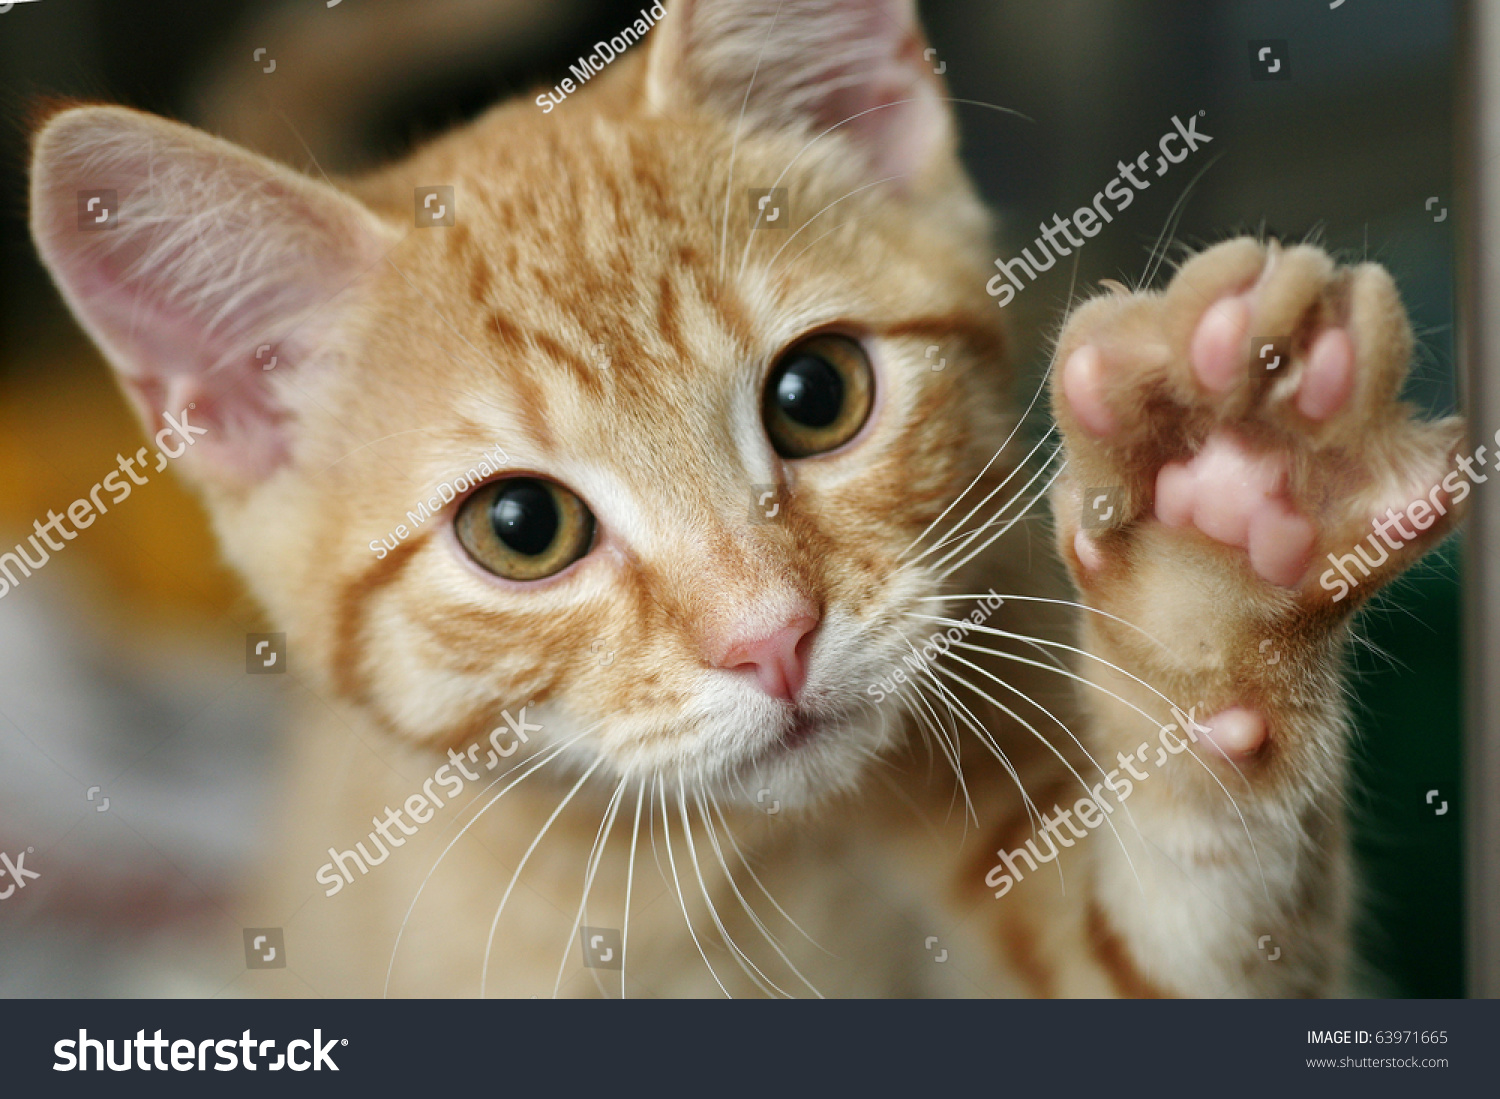 Cute ginger kitten waving #63971665